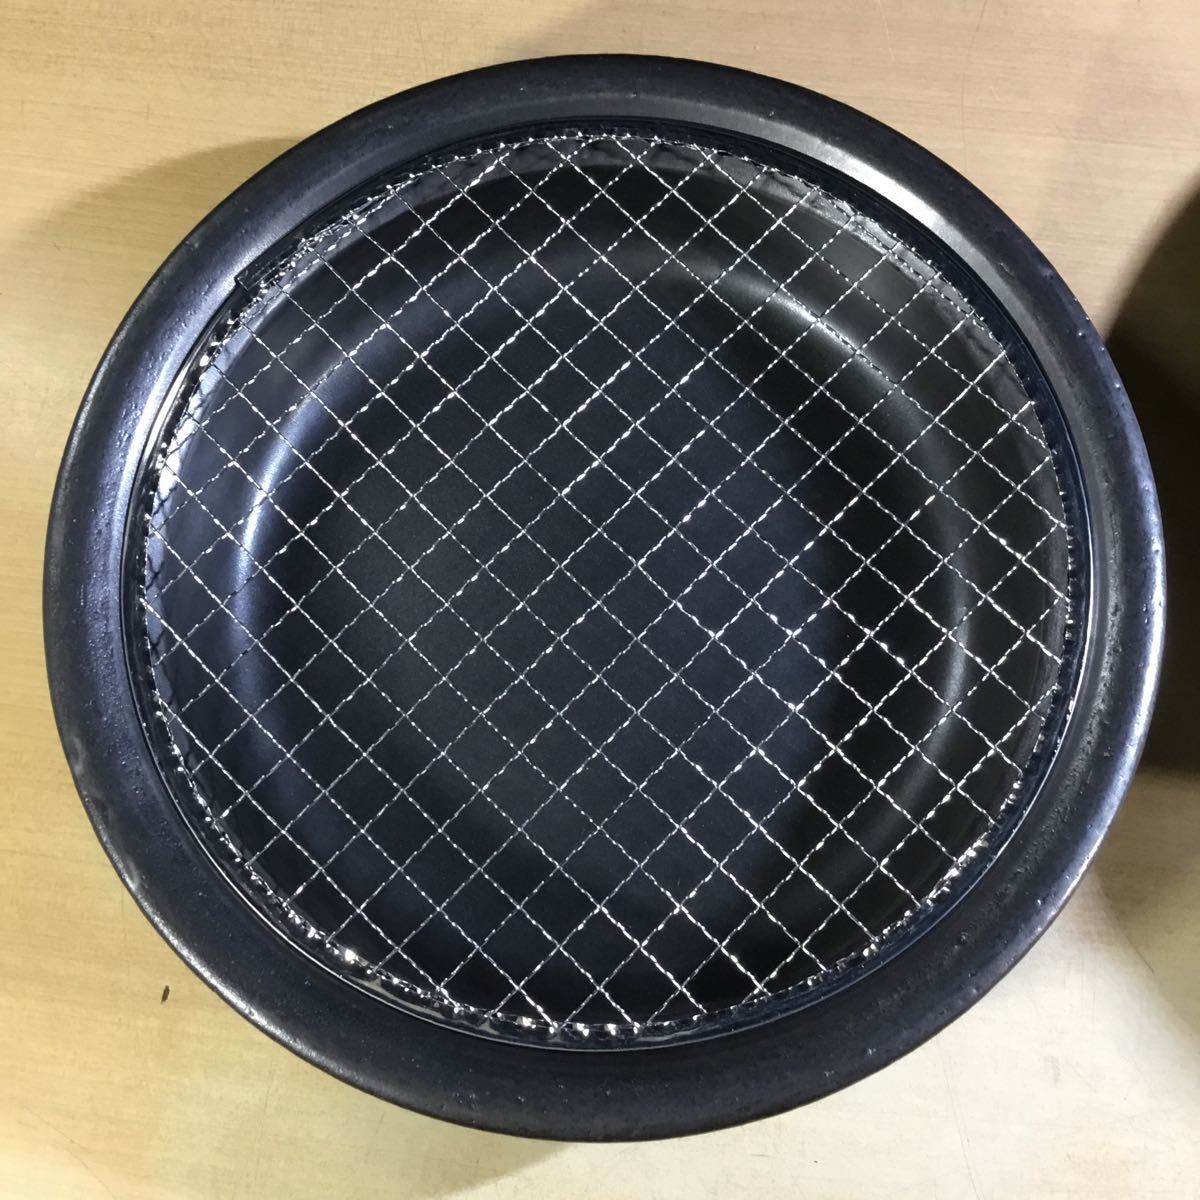 (012966E) 燻製も出来る陶板鍋 耐熱陶器 丸鍋 鉄丸網 スモークチップ セット 中古品_画像2